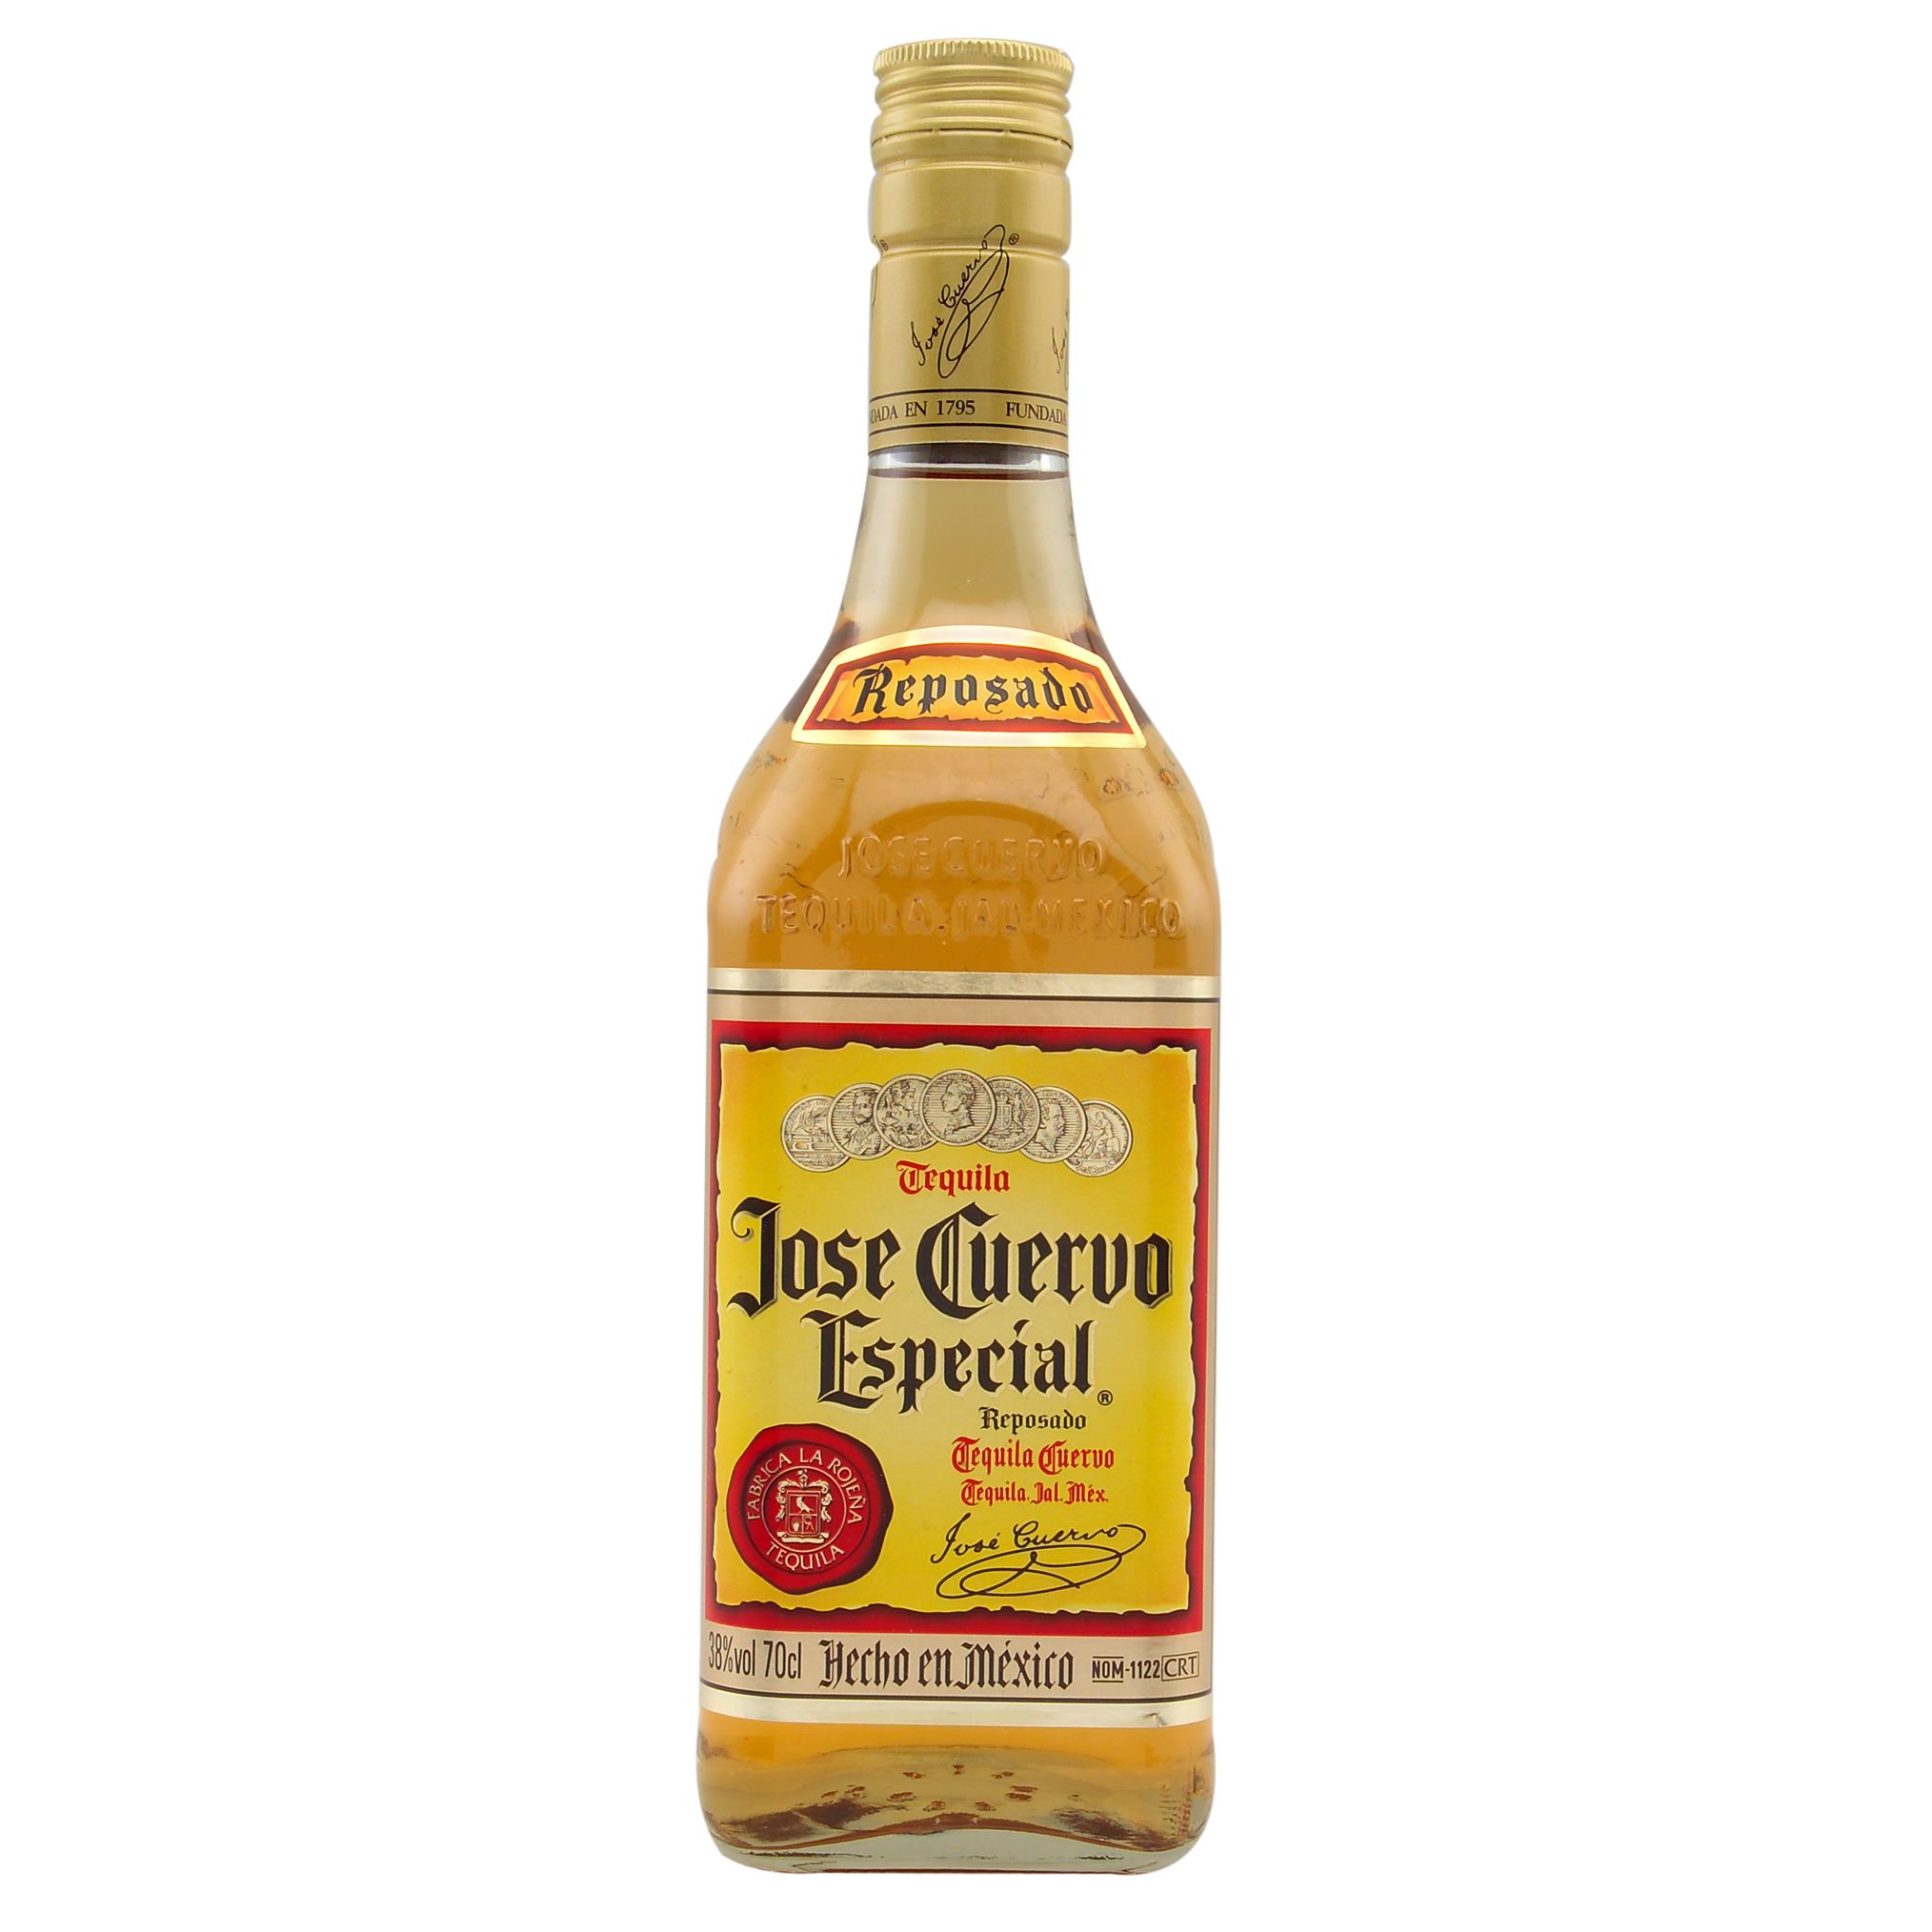 José Cuervo Tequila Reposado Especial at John Lewis